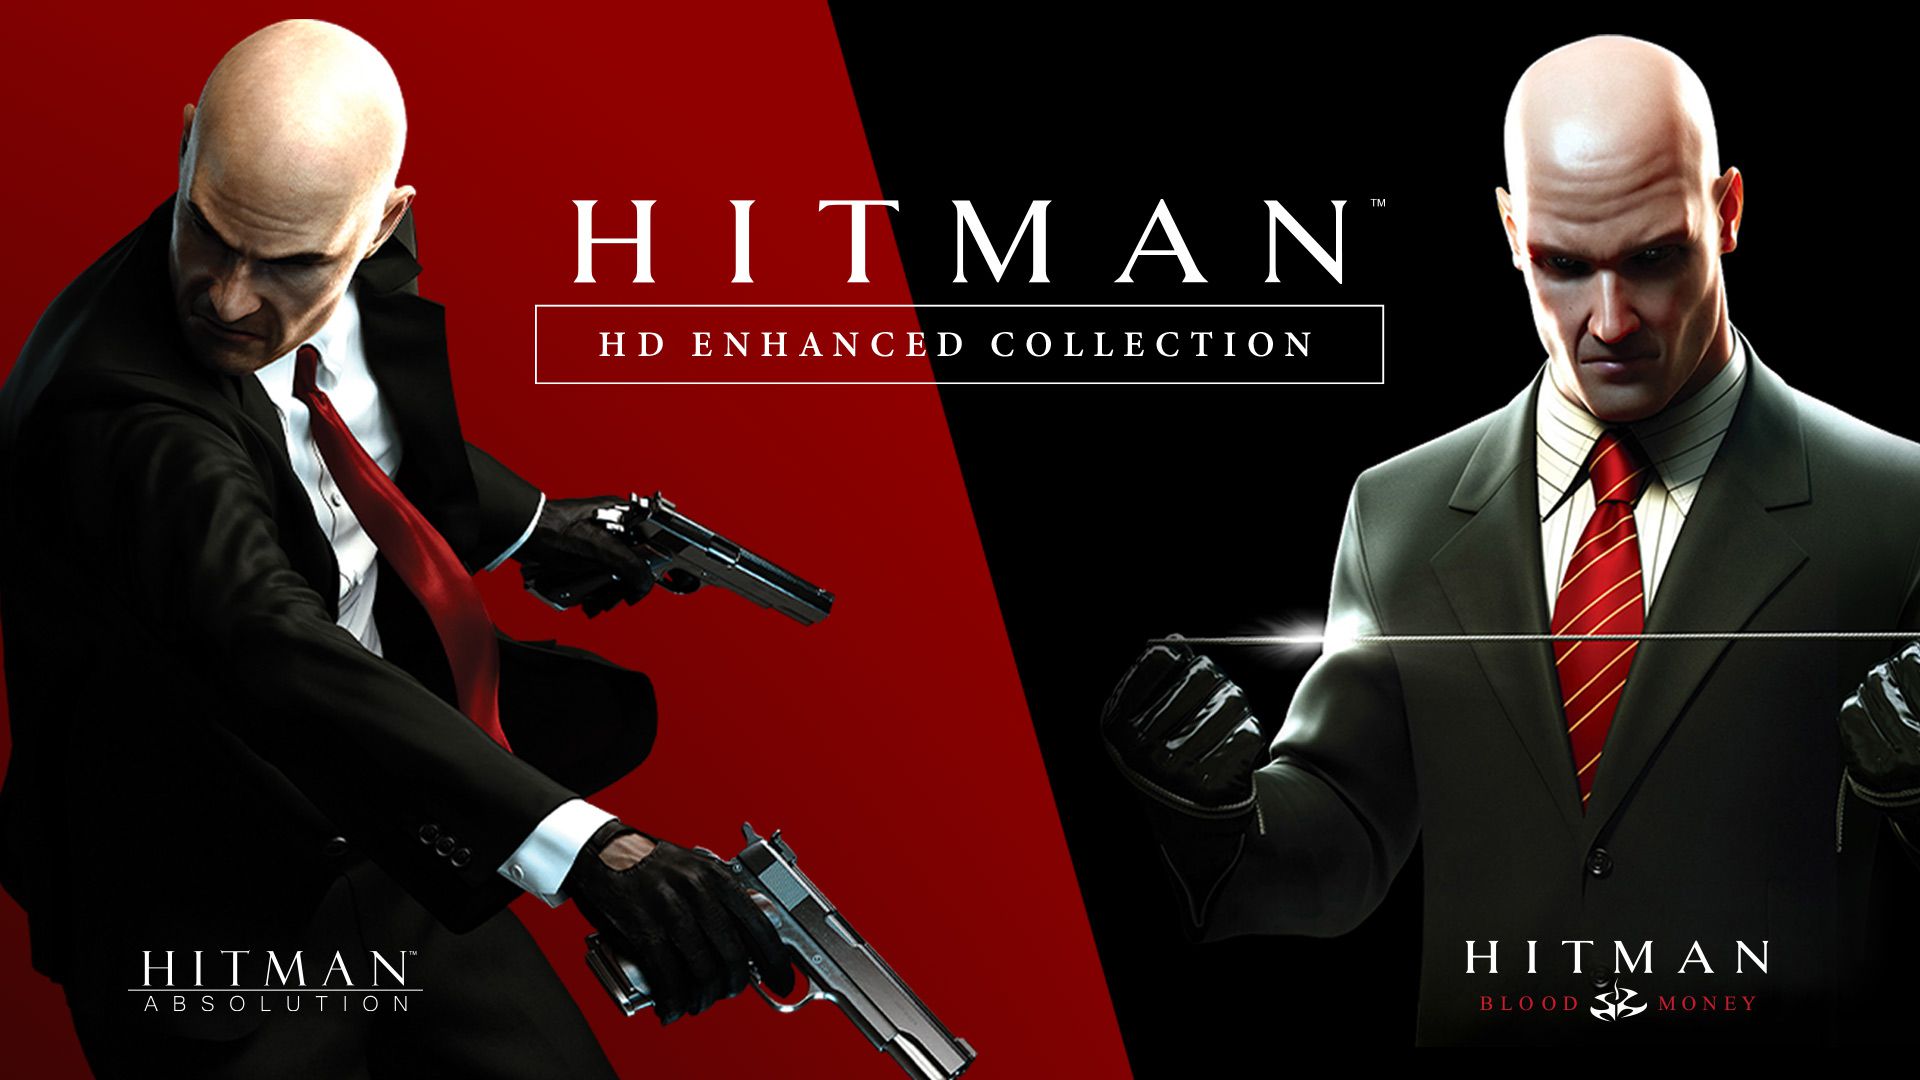 Hitman HD Enhanced Collection Principal